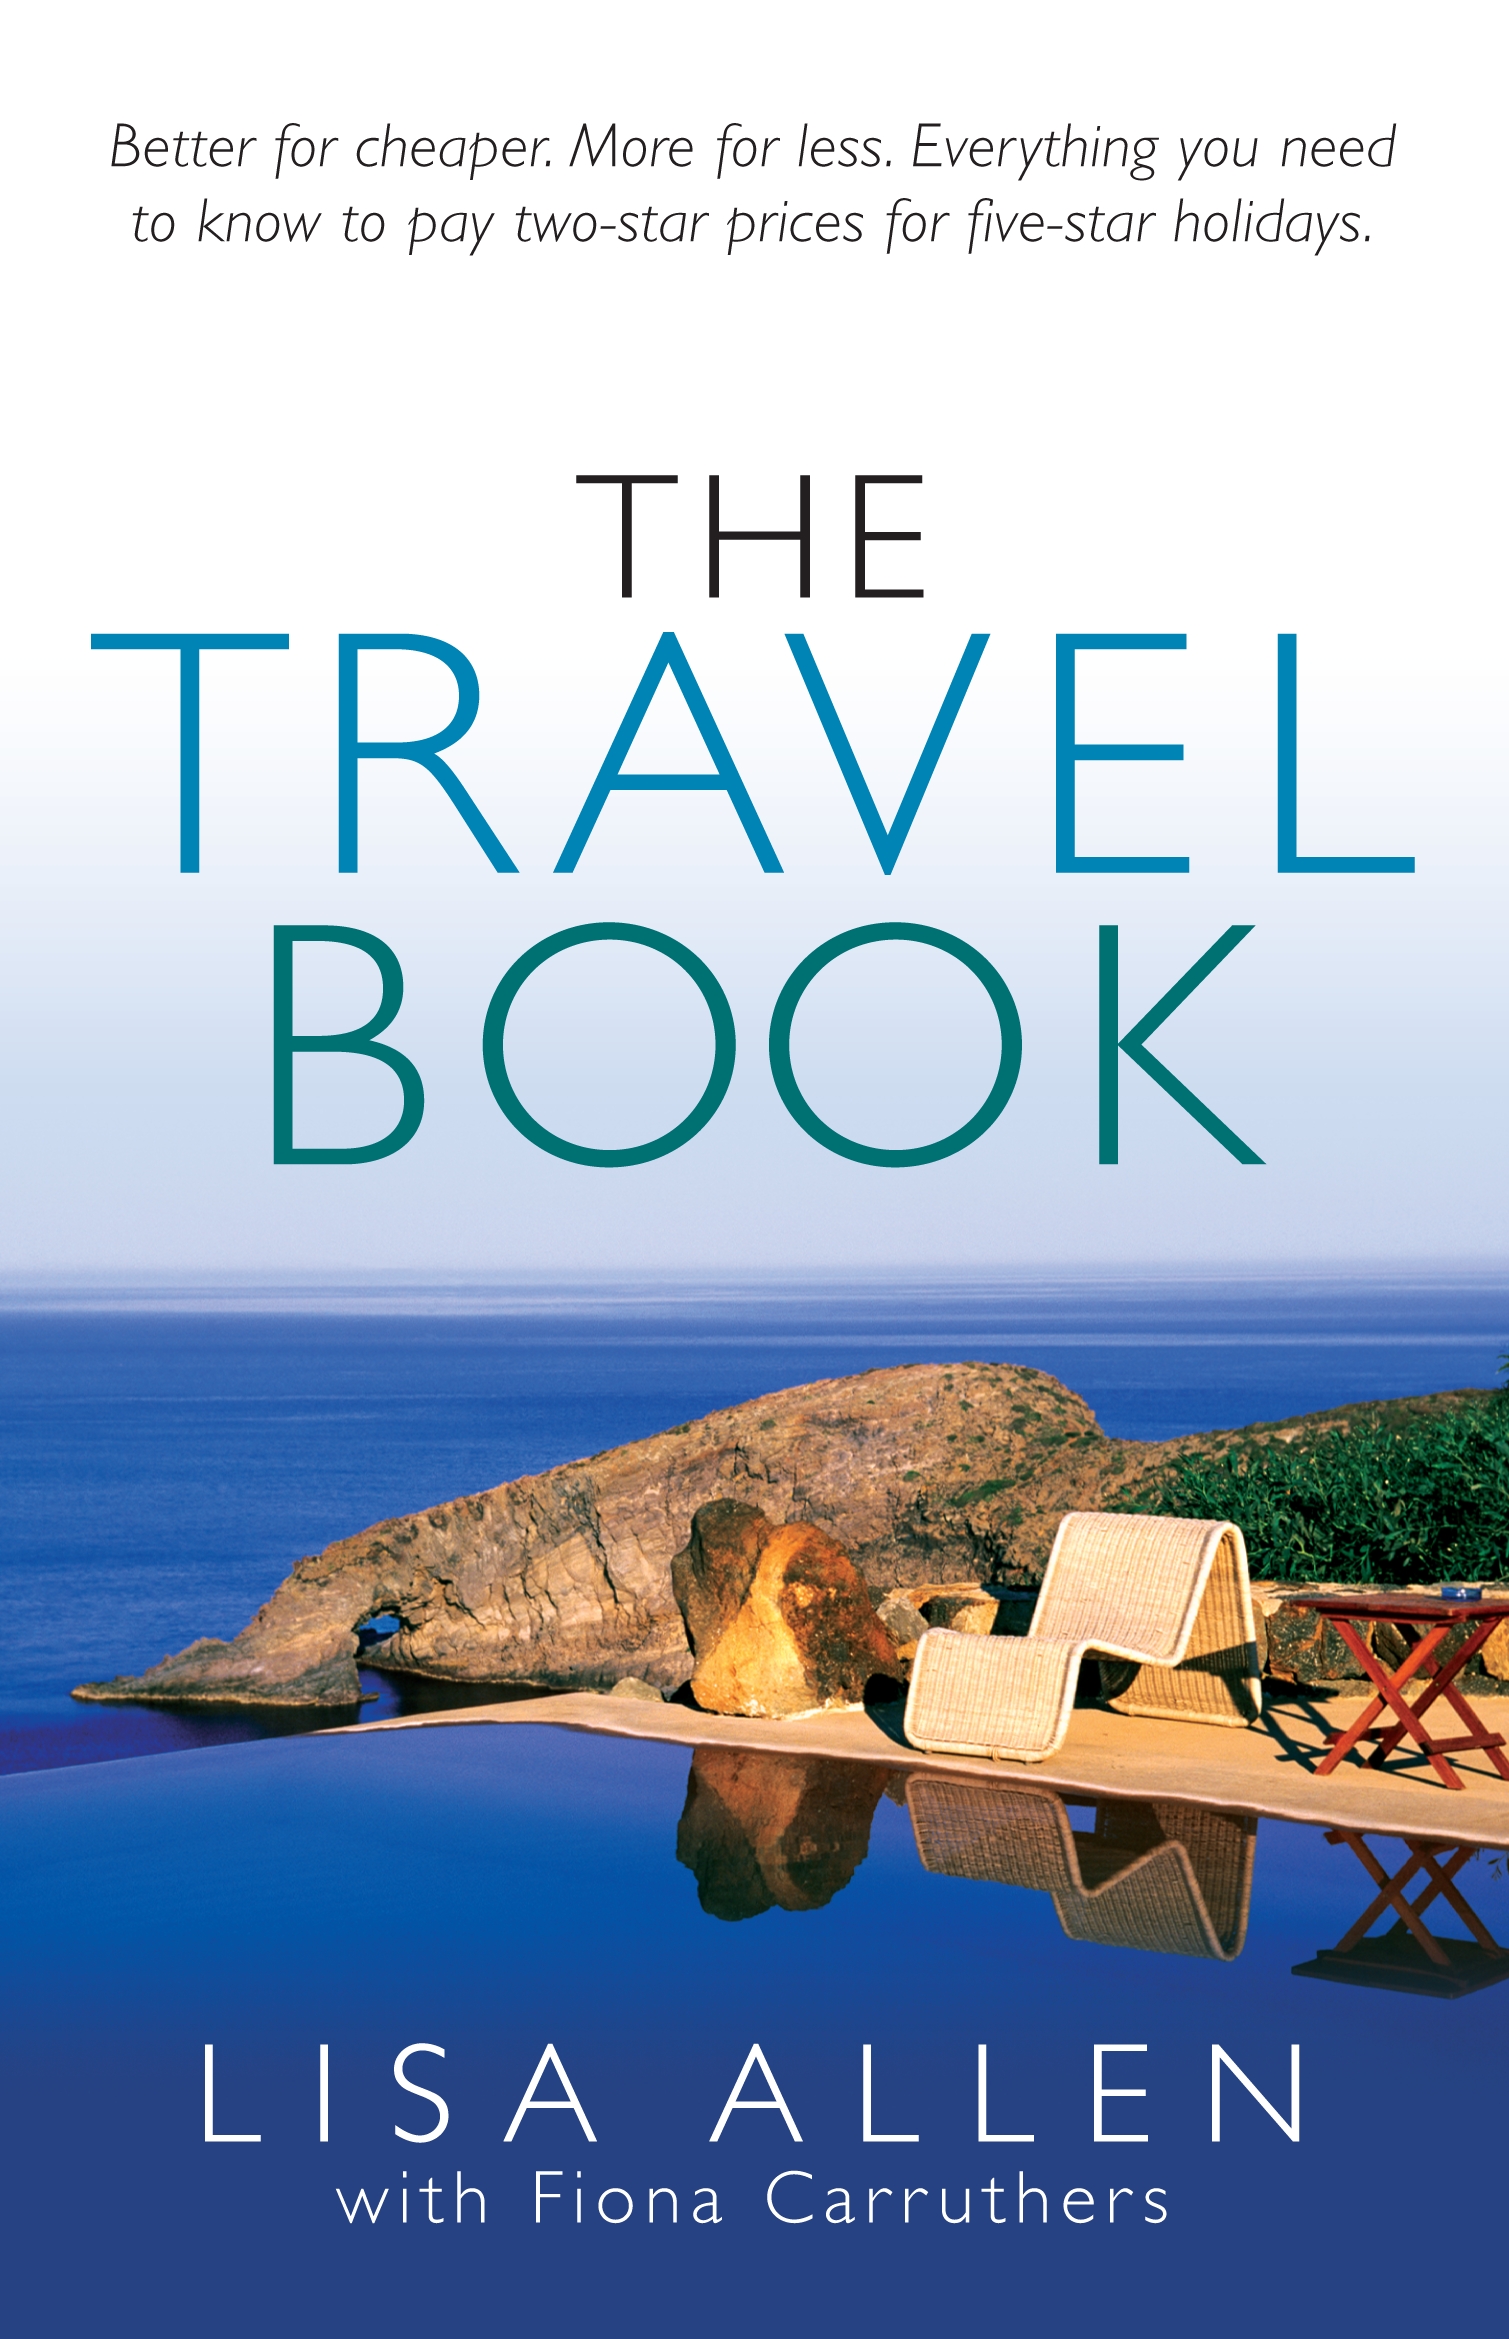 travel based novels